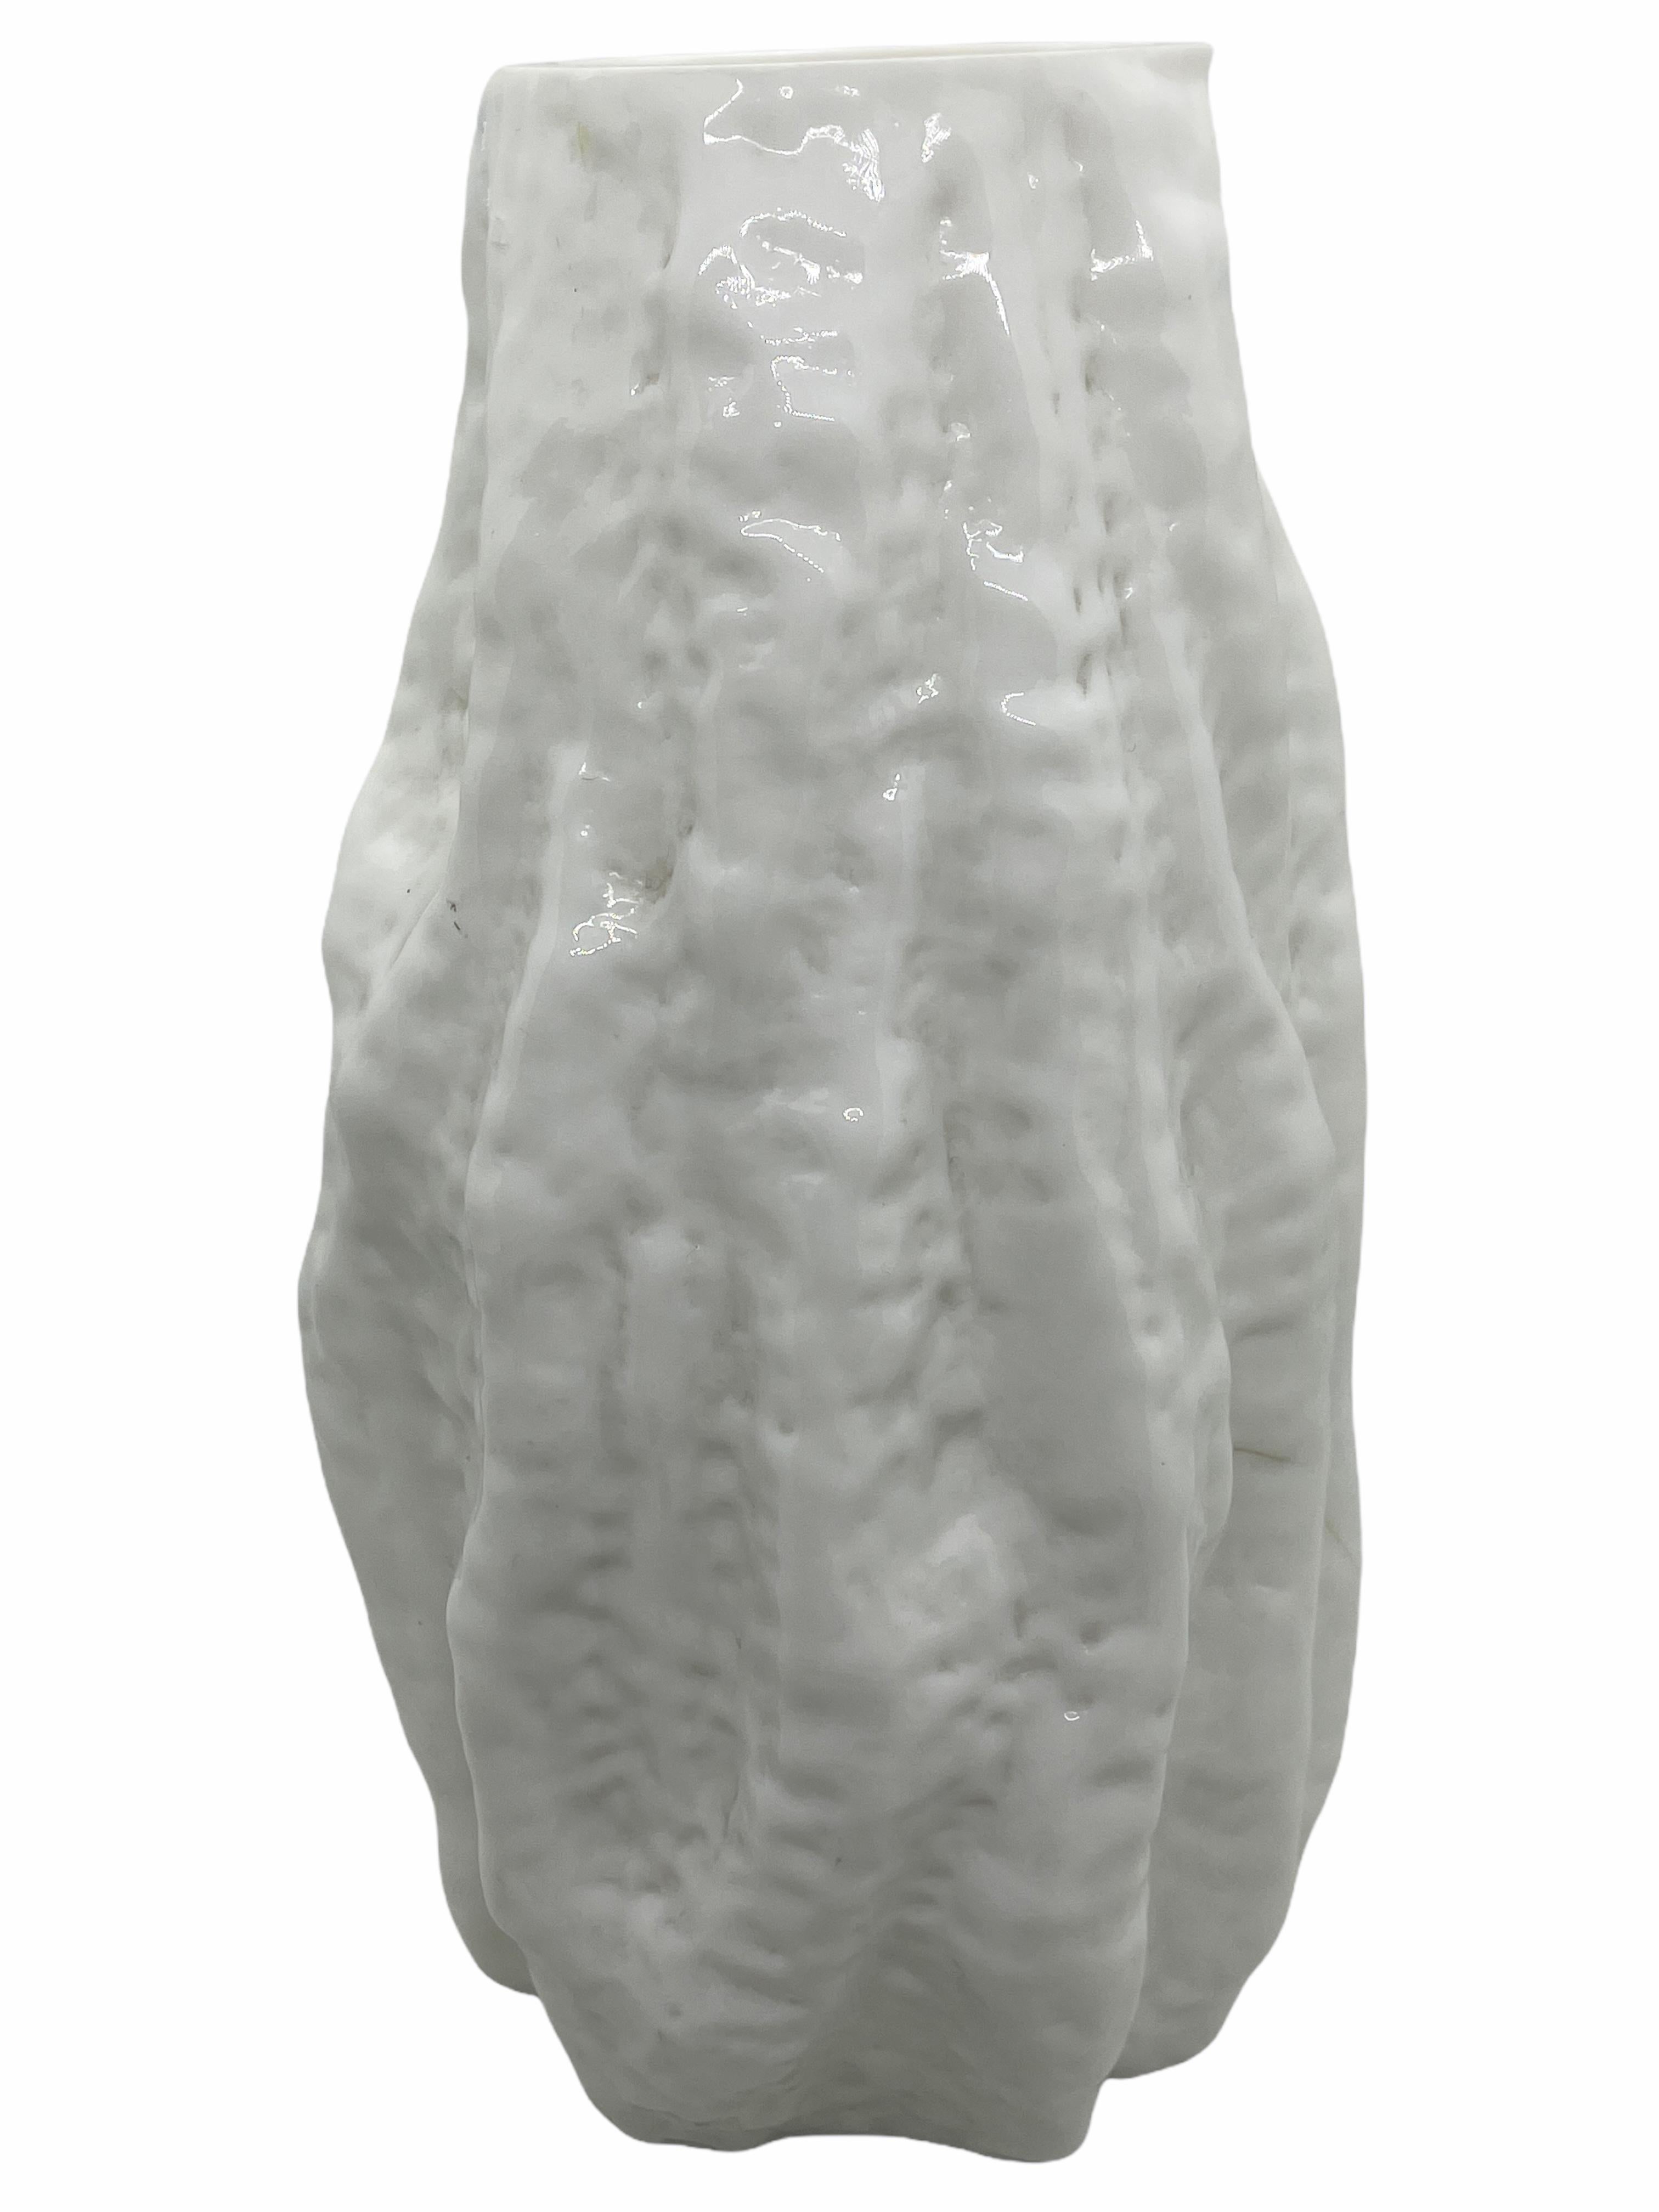 Stunning German Brutalist White Glass Rock Vase 1970s Mid-Century Modern In Good Condition For Sale In Nuernberg, DE